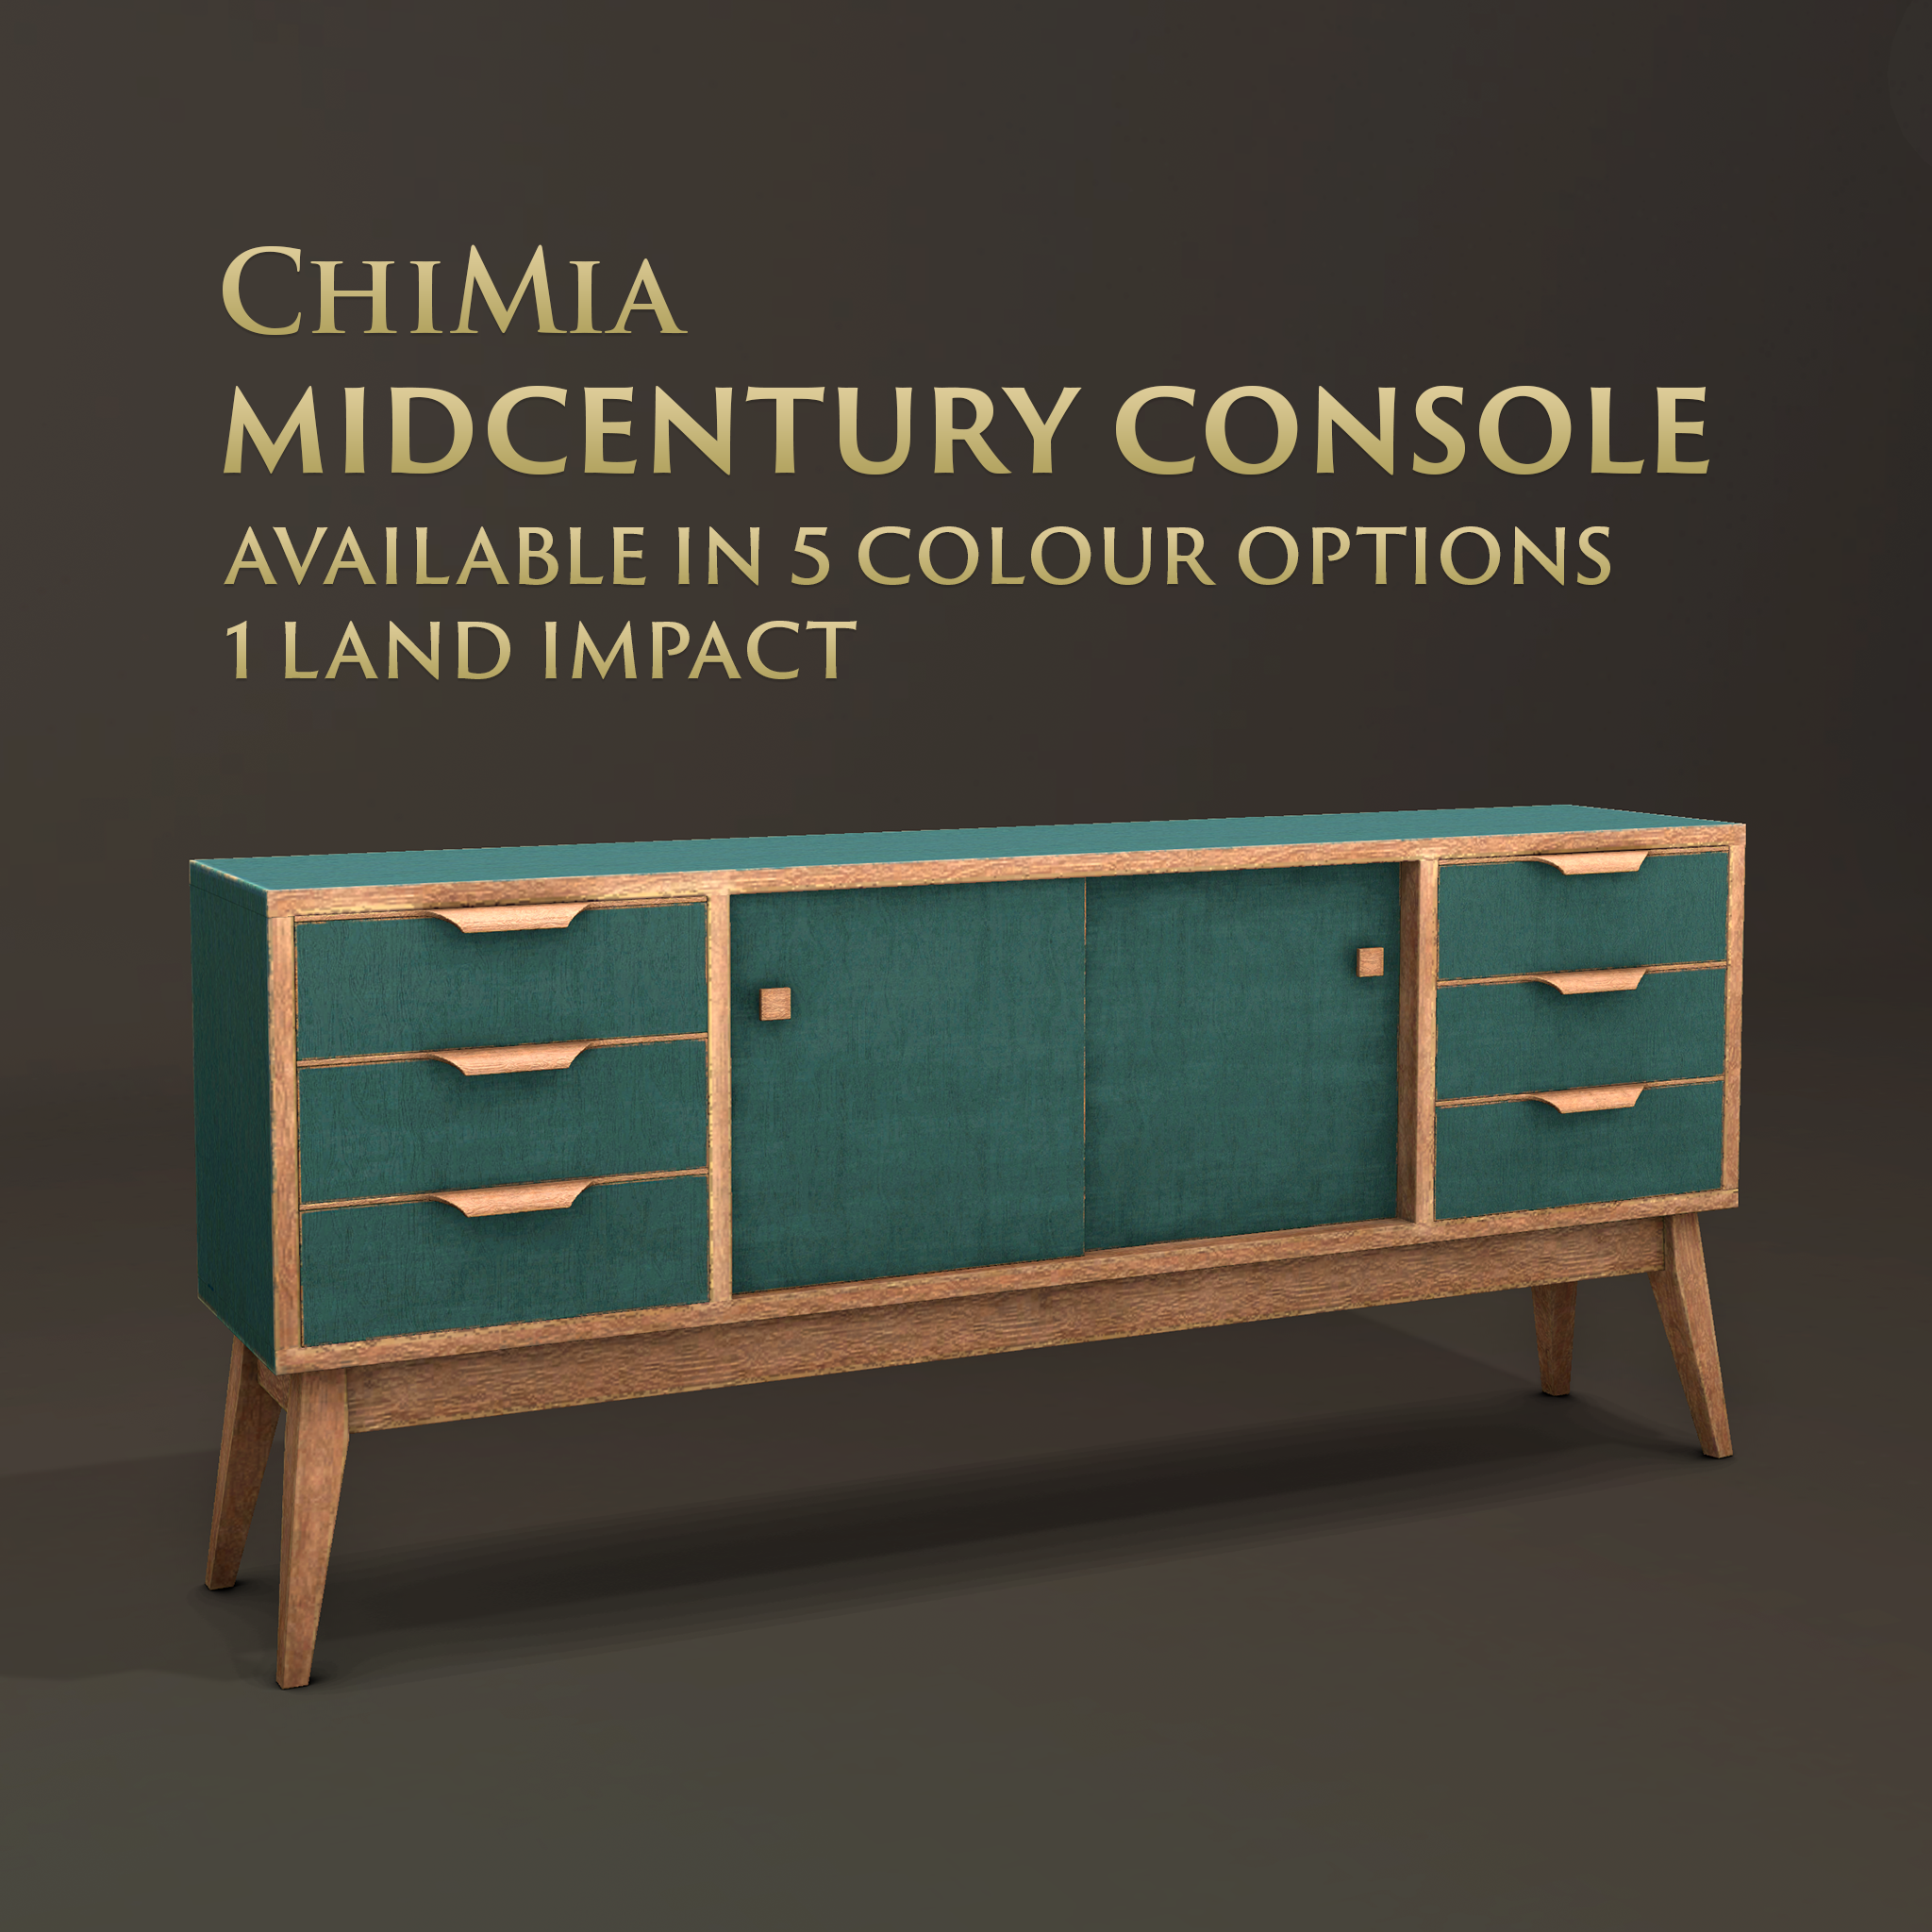 ChiMia – Mid-century Console